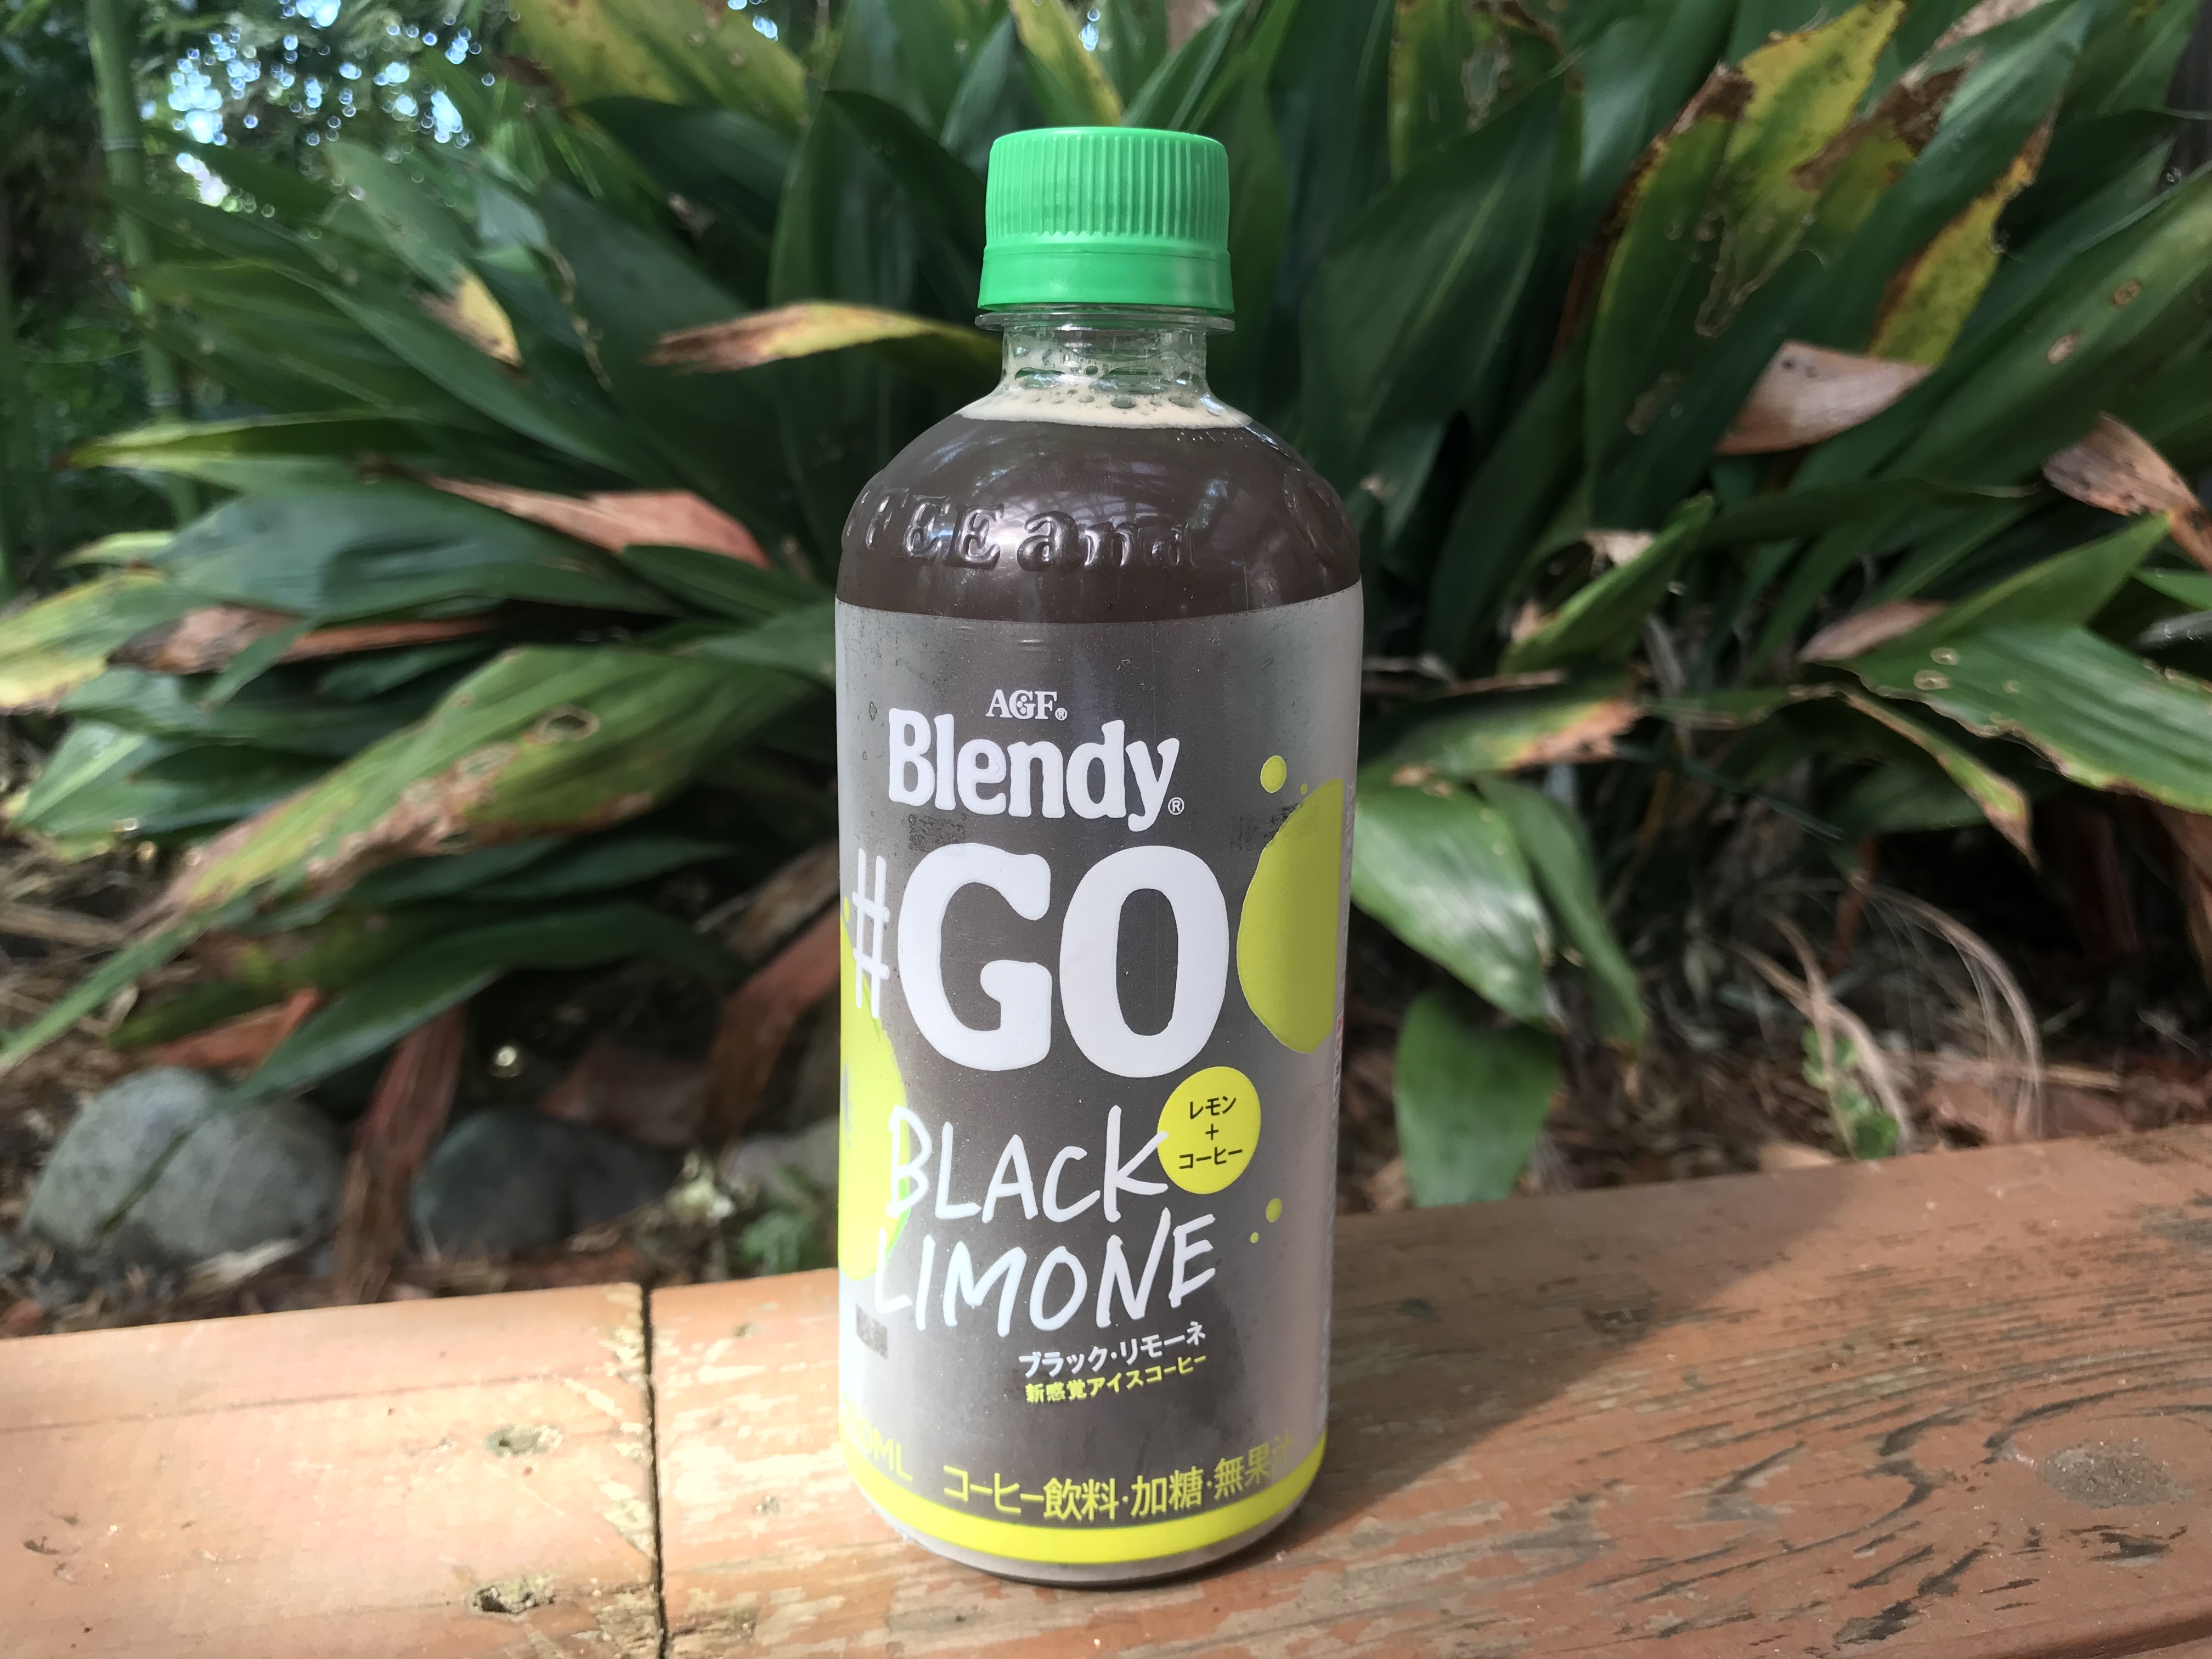 Review: Blendy Black Lemon Coffee from Japan